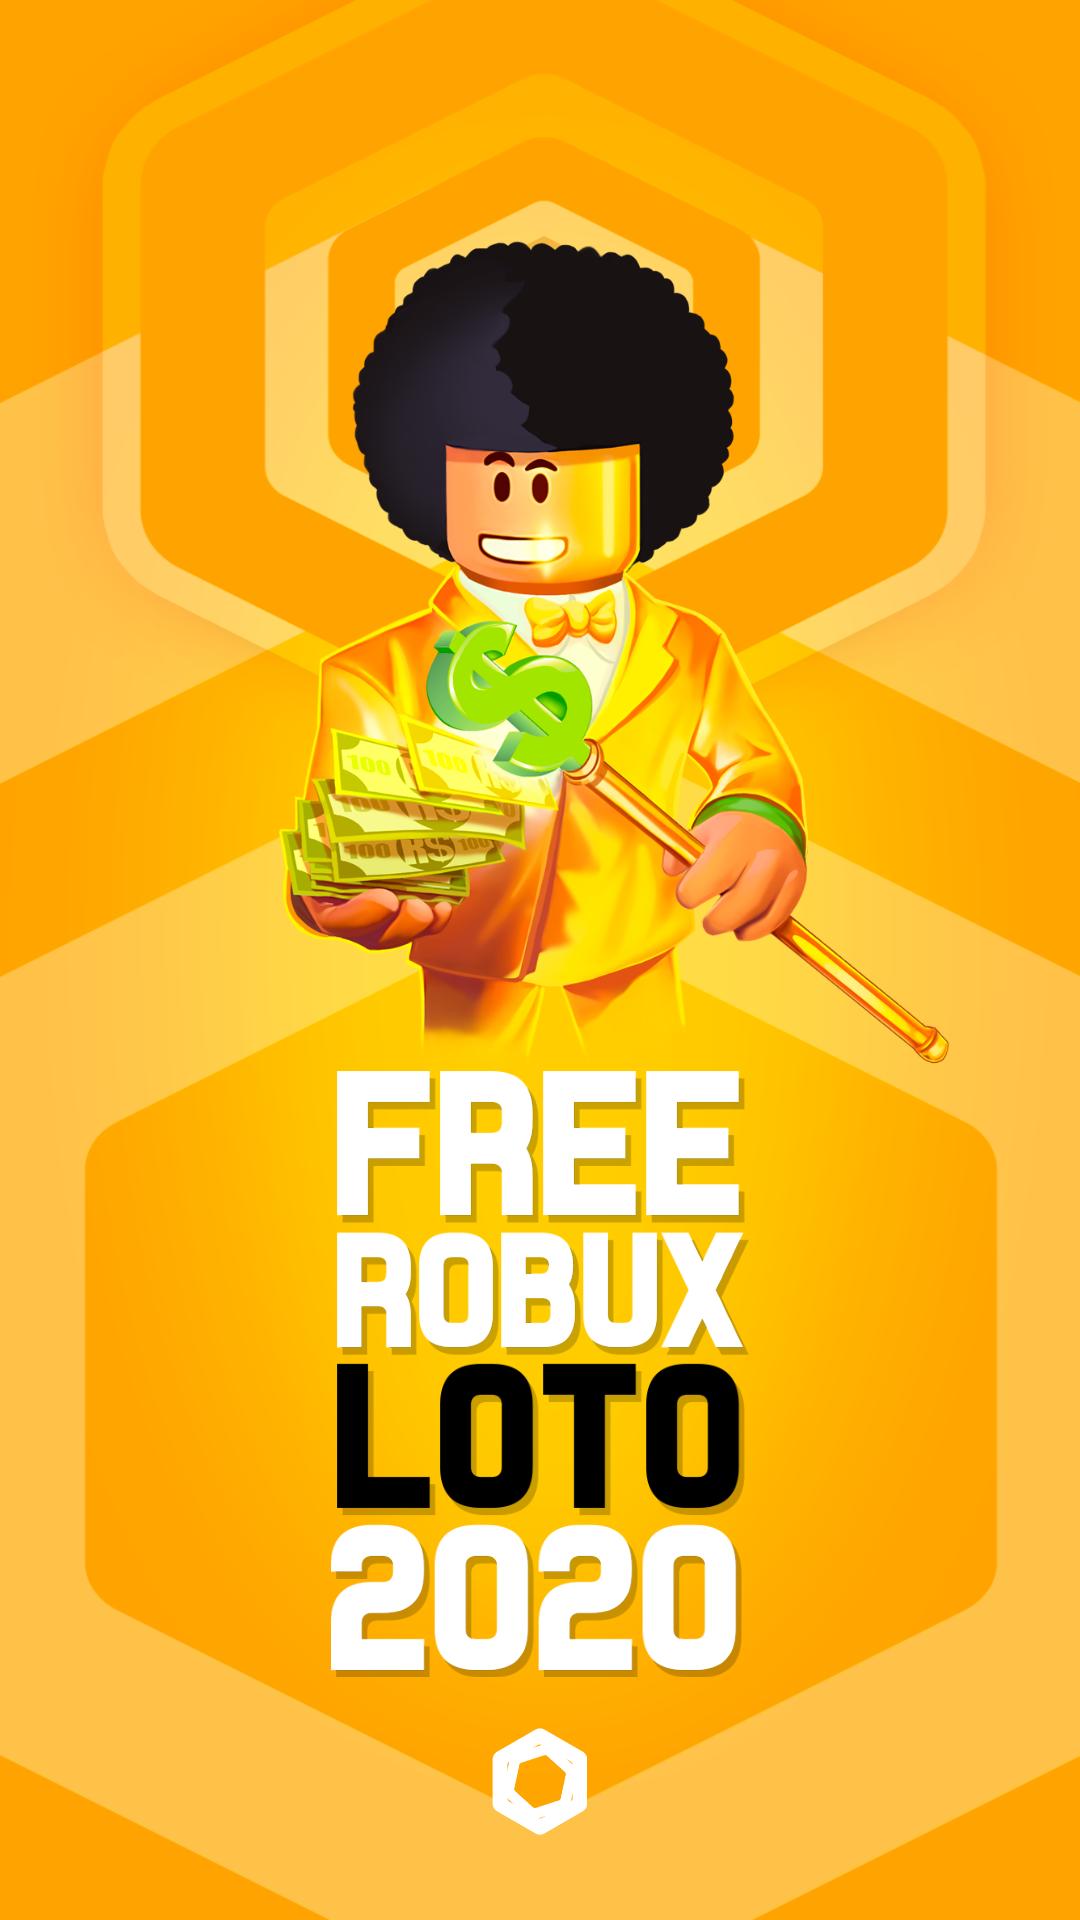 Free Robux Loto 2020 For Android Apk Download - скачать free robux loto 2020 взлом